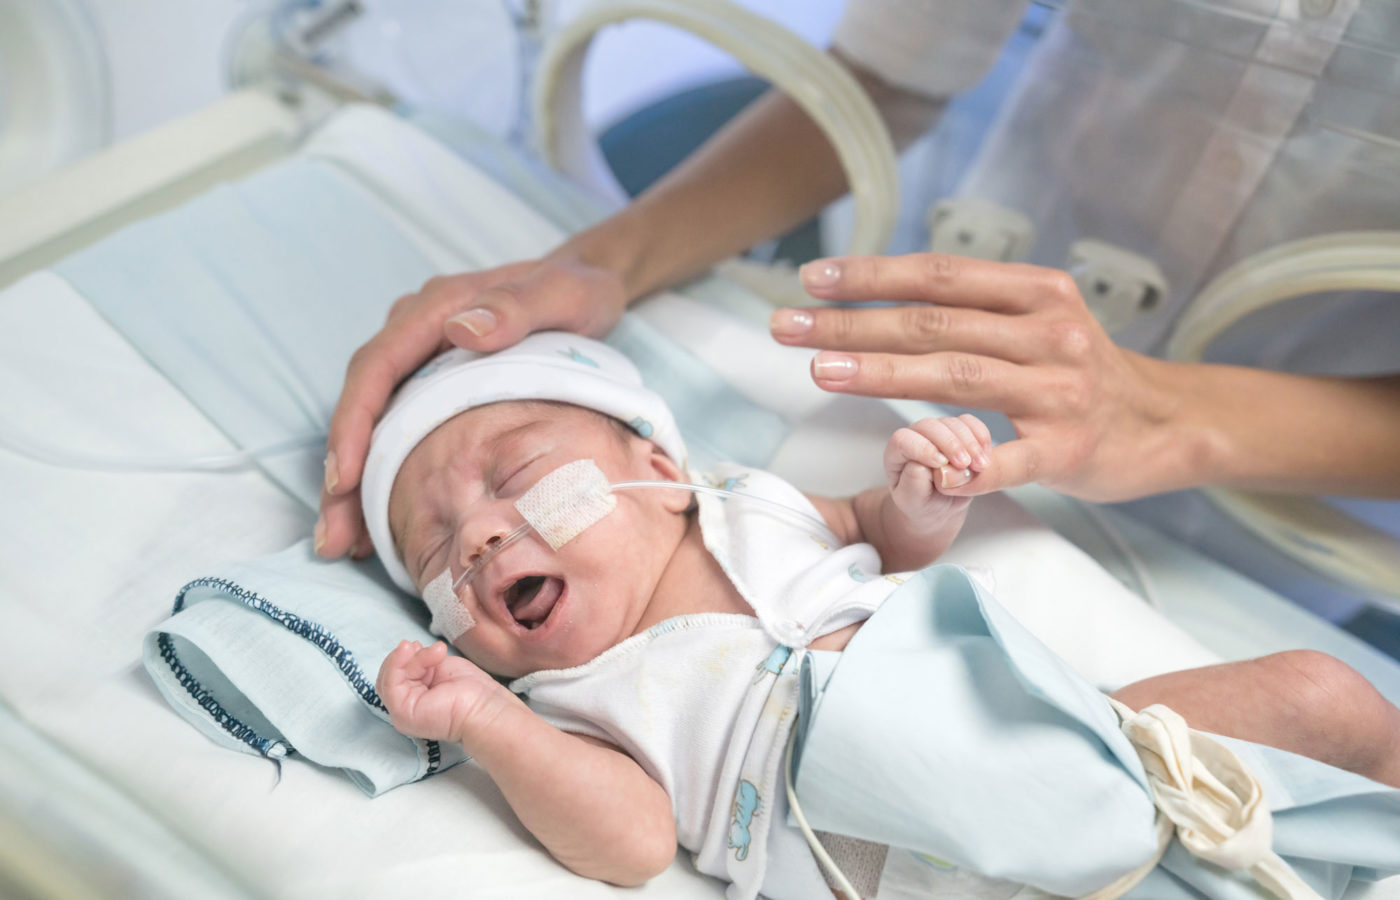 Small newborn baby cries in an incubator